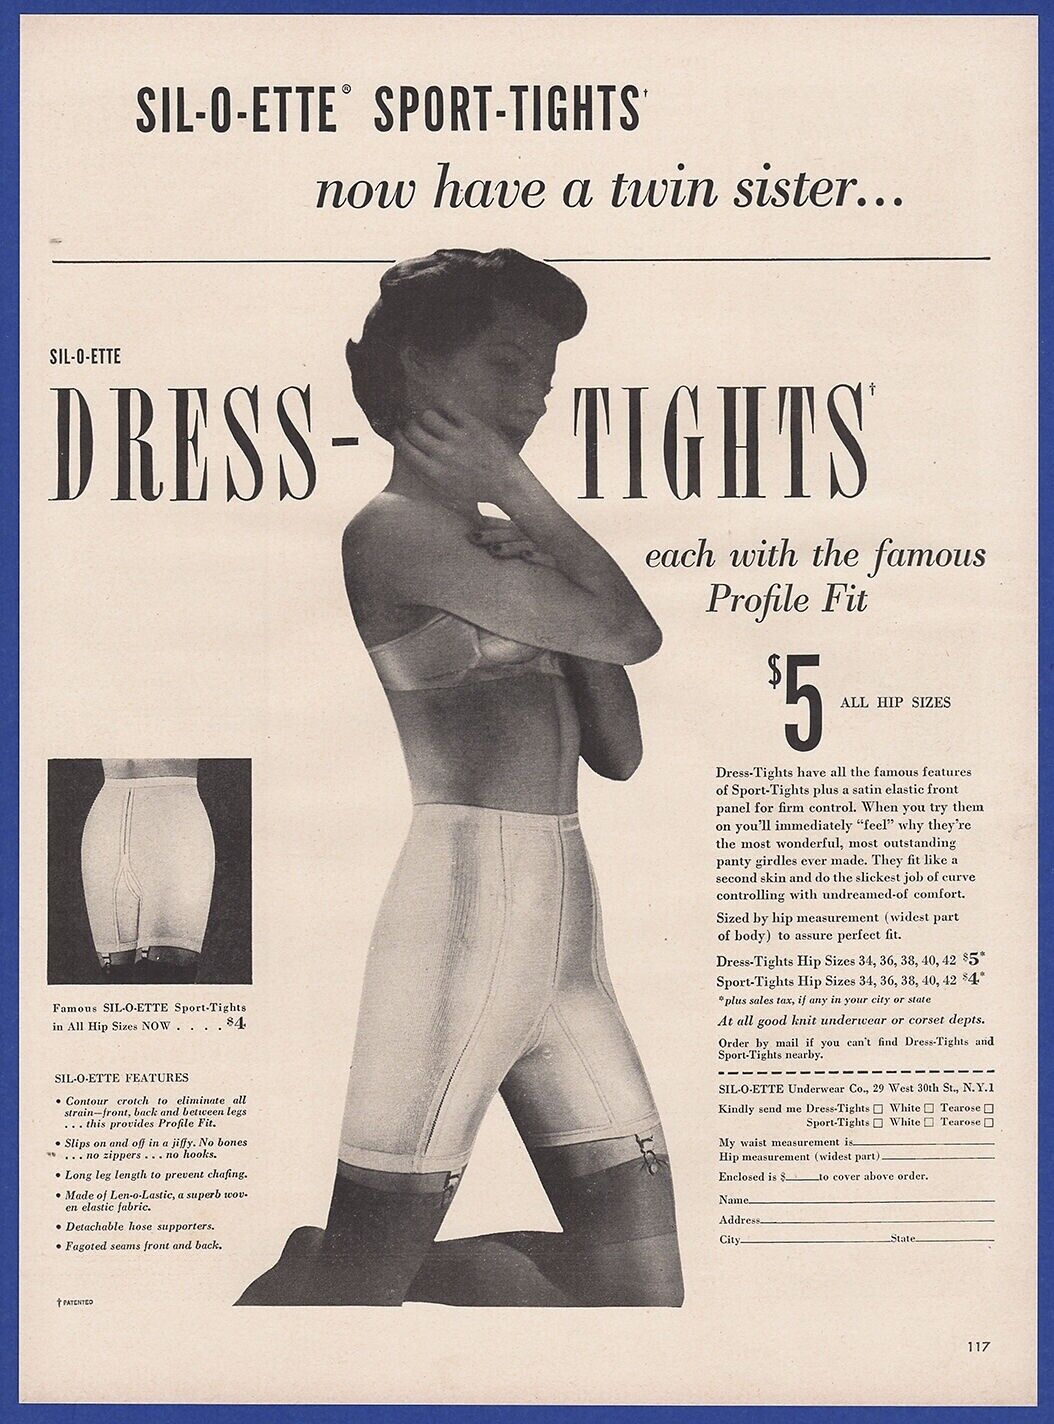 Vintage 1949 SIL-O-ETTE Dress-Tights Women's Fashion Lingerie Print Ad 1940's Sil-O-Ette